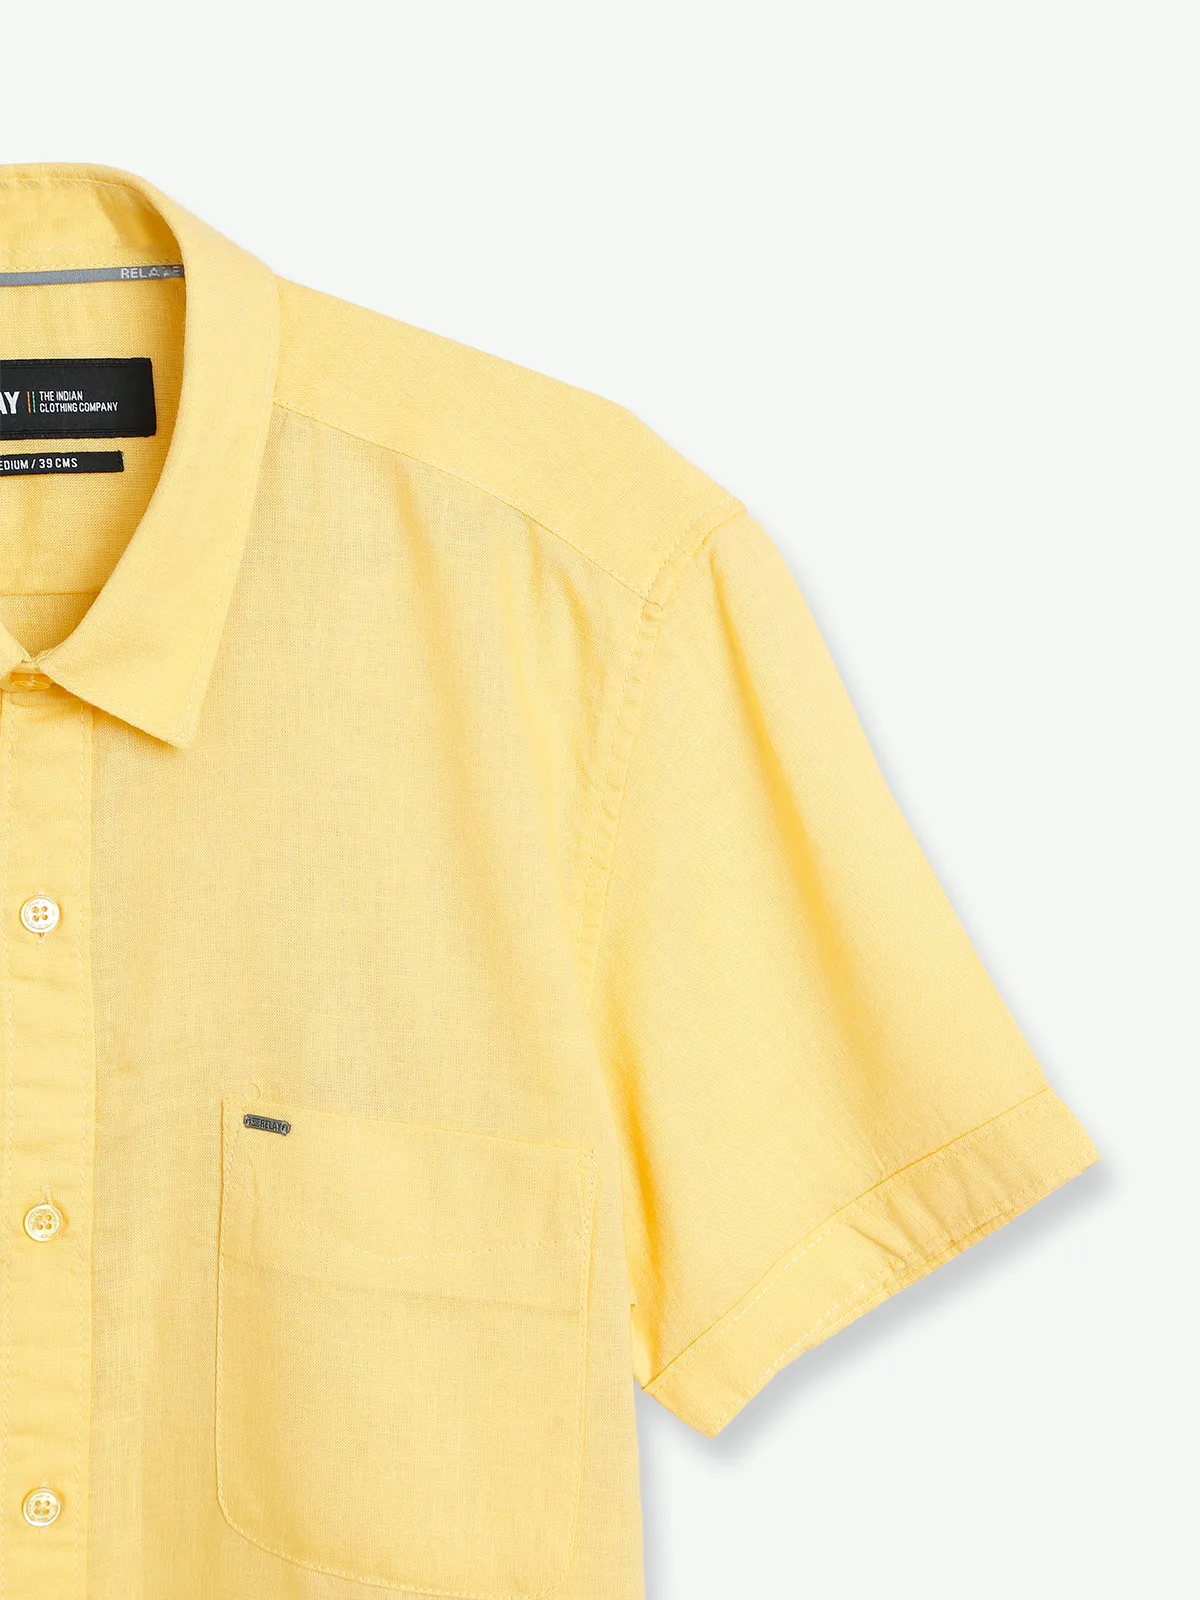 Relay plain yellow cotton shirt